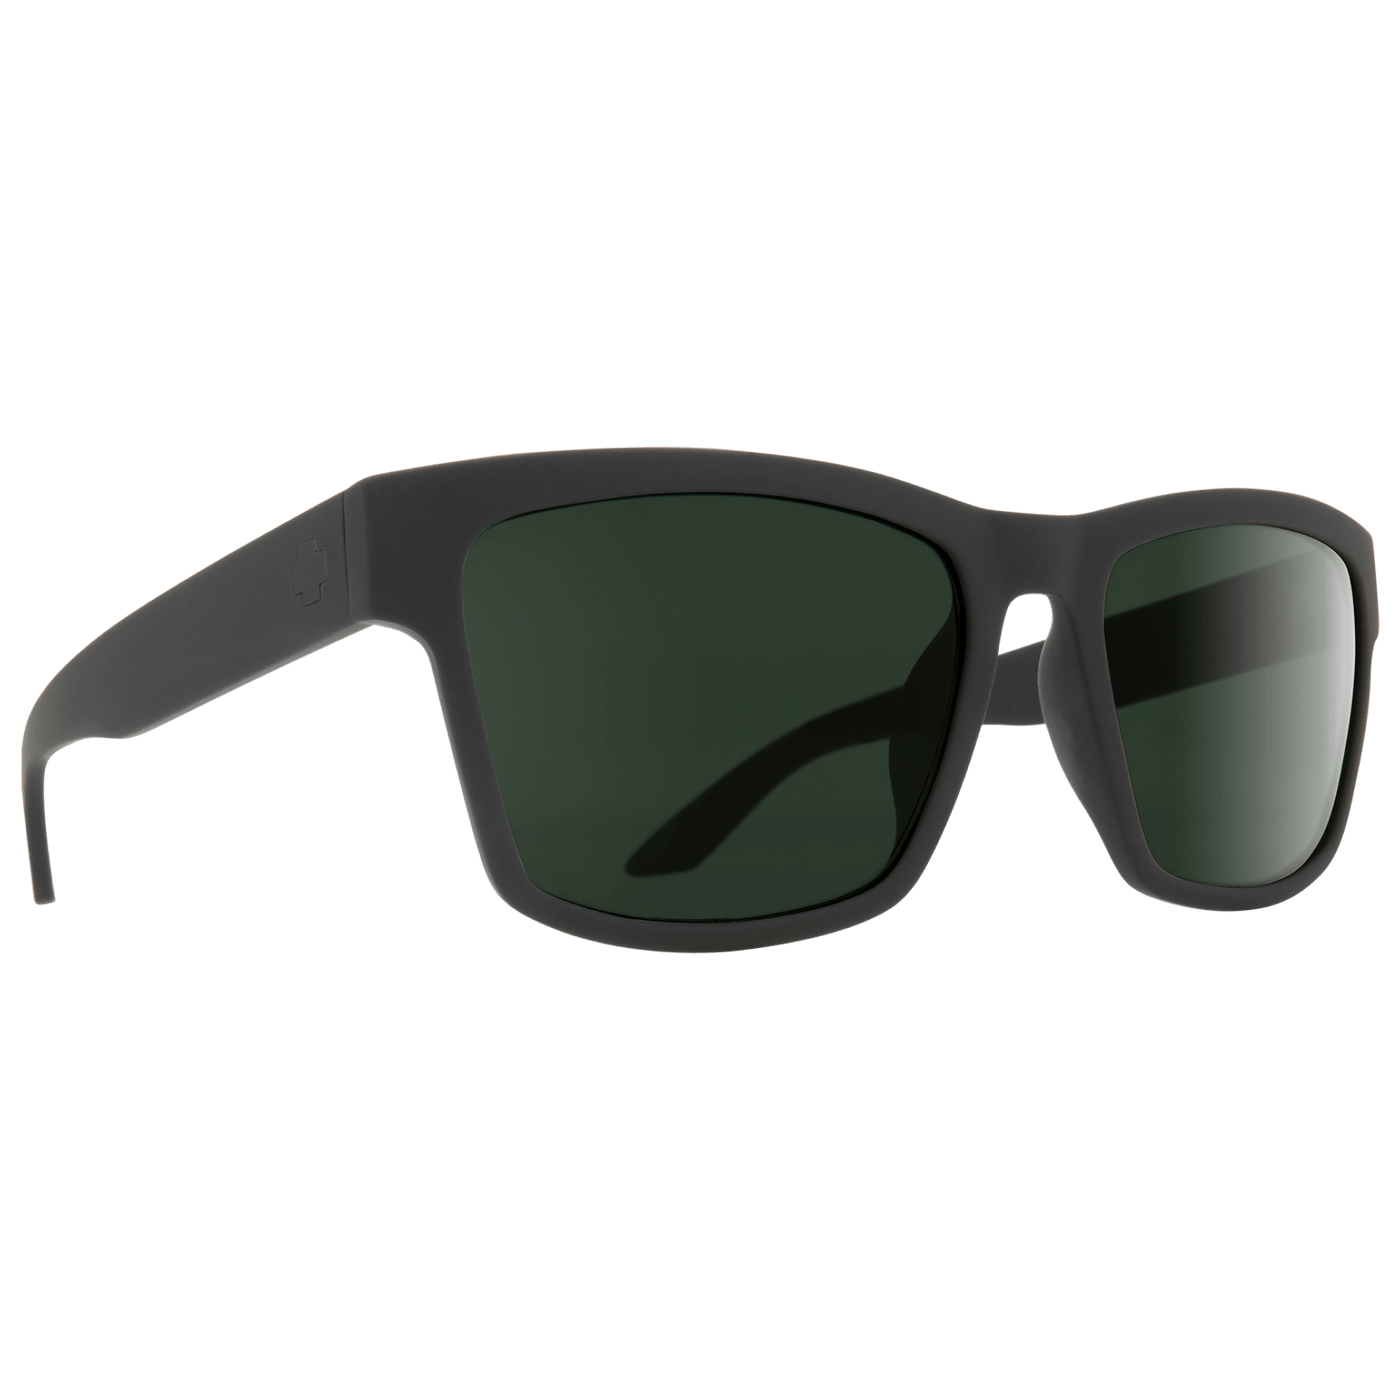 SPY HAIGHT 2 Sunglasses Happy Lens - SOSI Matte Black 8Lines Shop - Fast Shipping